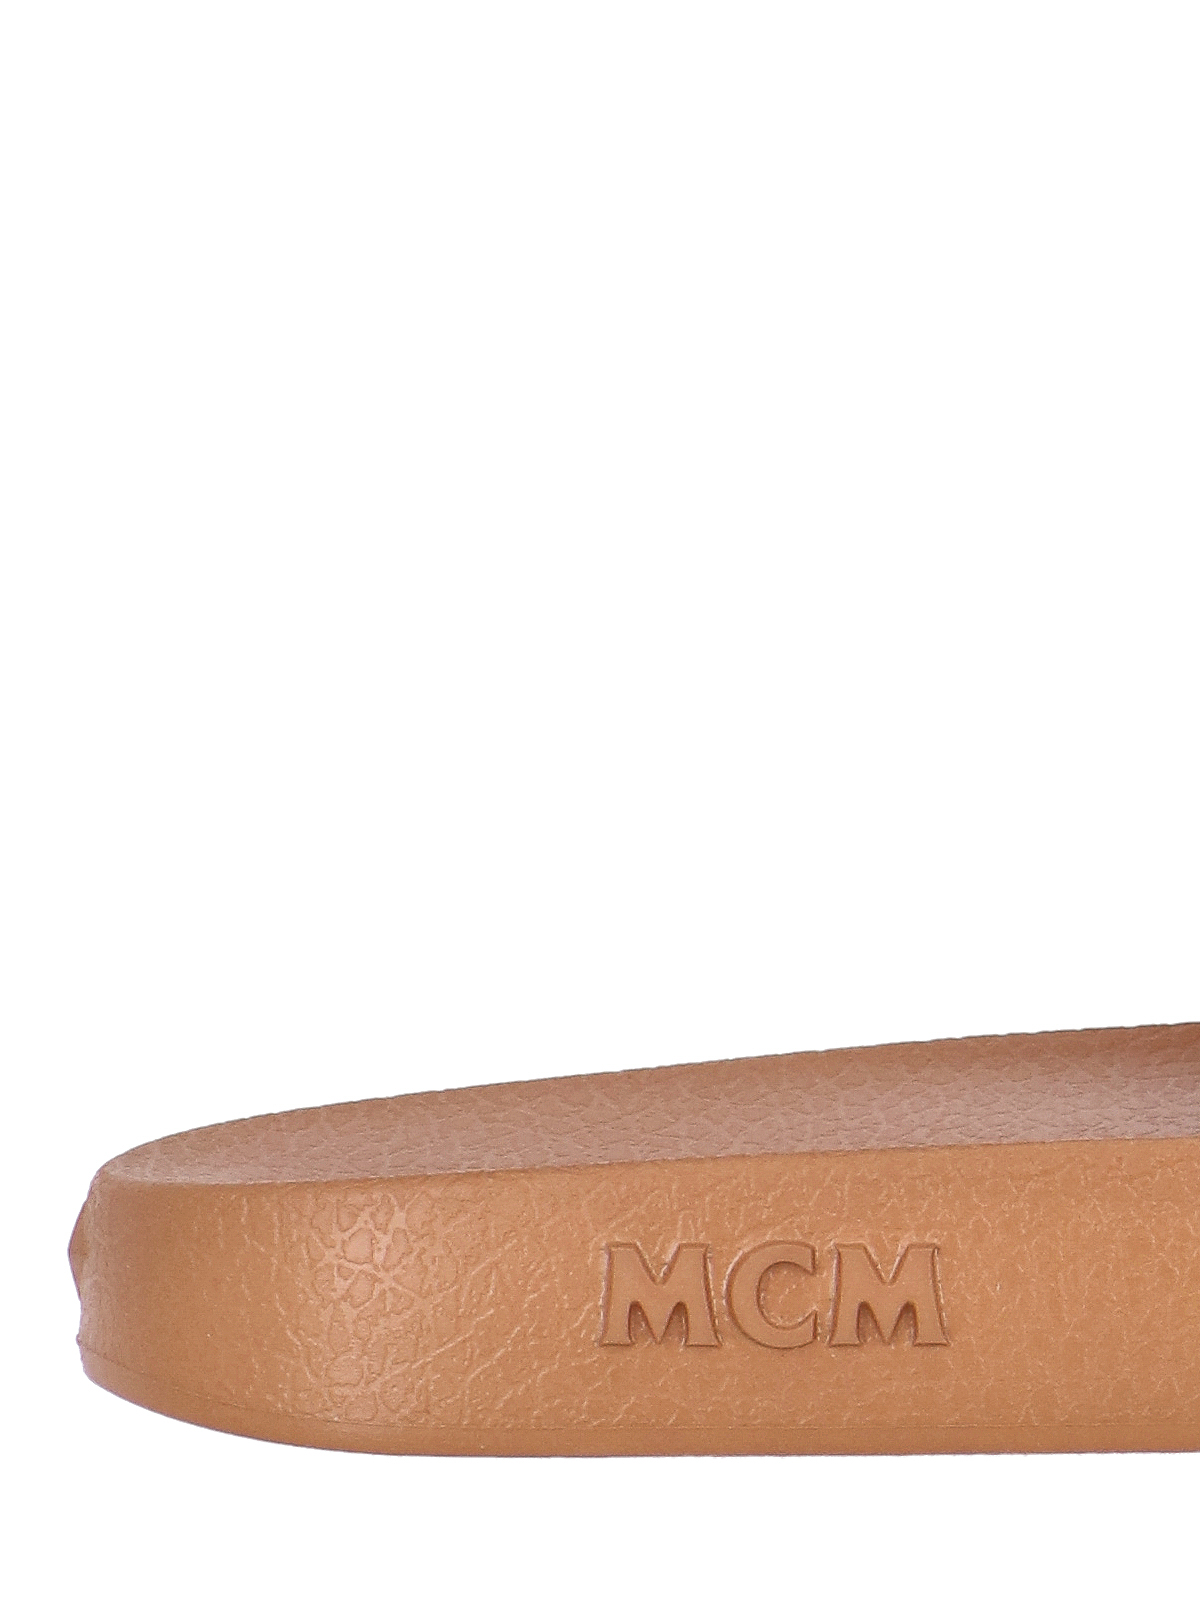 Sandals Mcm - Mcm sandals brown - MEXCAMM17CO | thebs.com [ikrix.com]